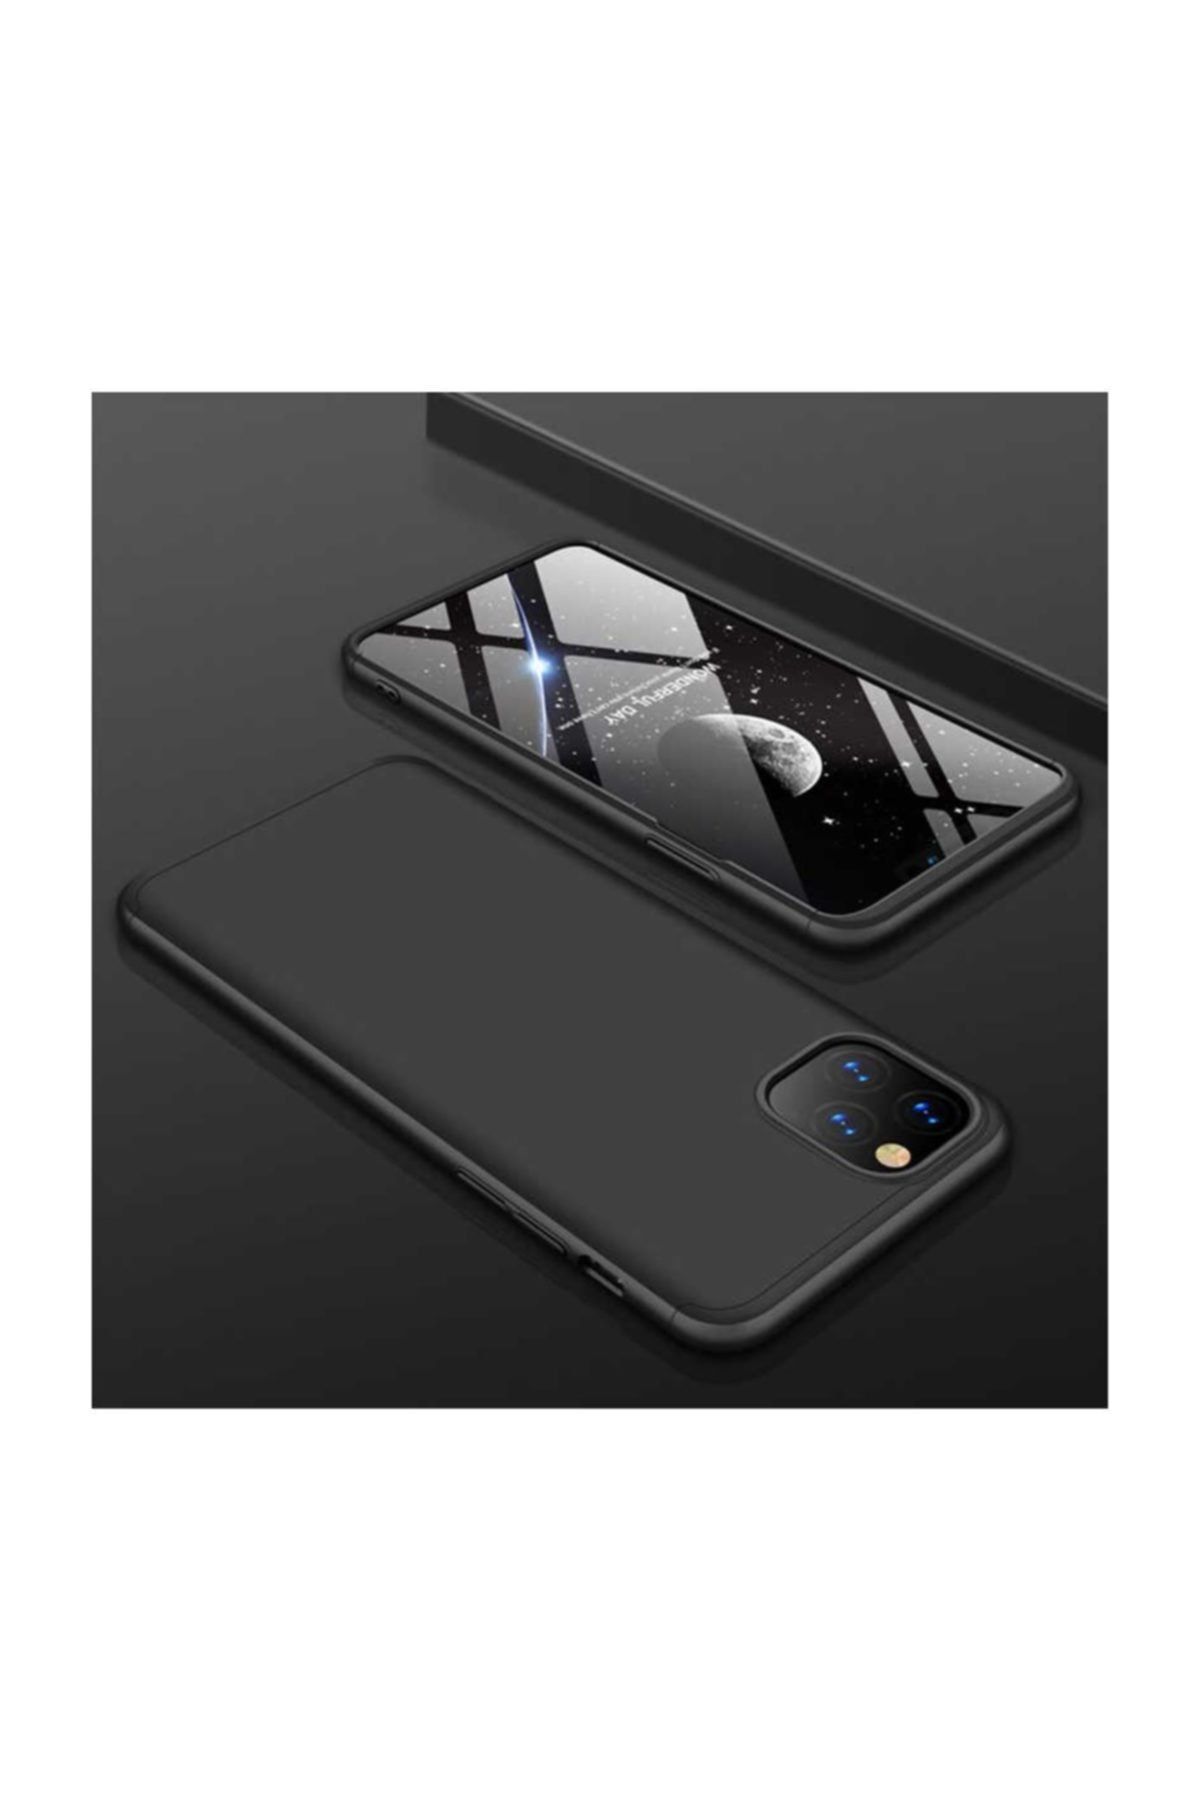 Dara Aksesuar Apple Iphone 11 Pro Max Uyumlu Telefon Kılıfı Kamera Korumalı Platinum Kılıf Siyah